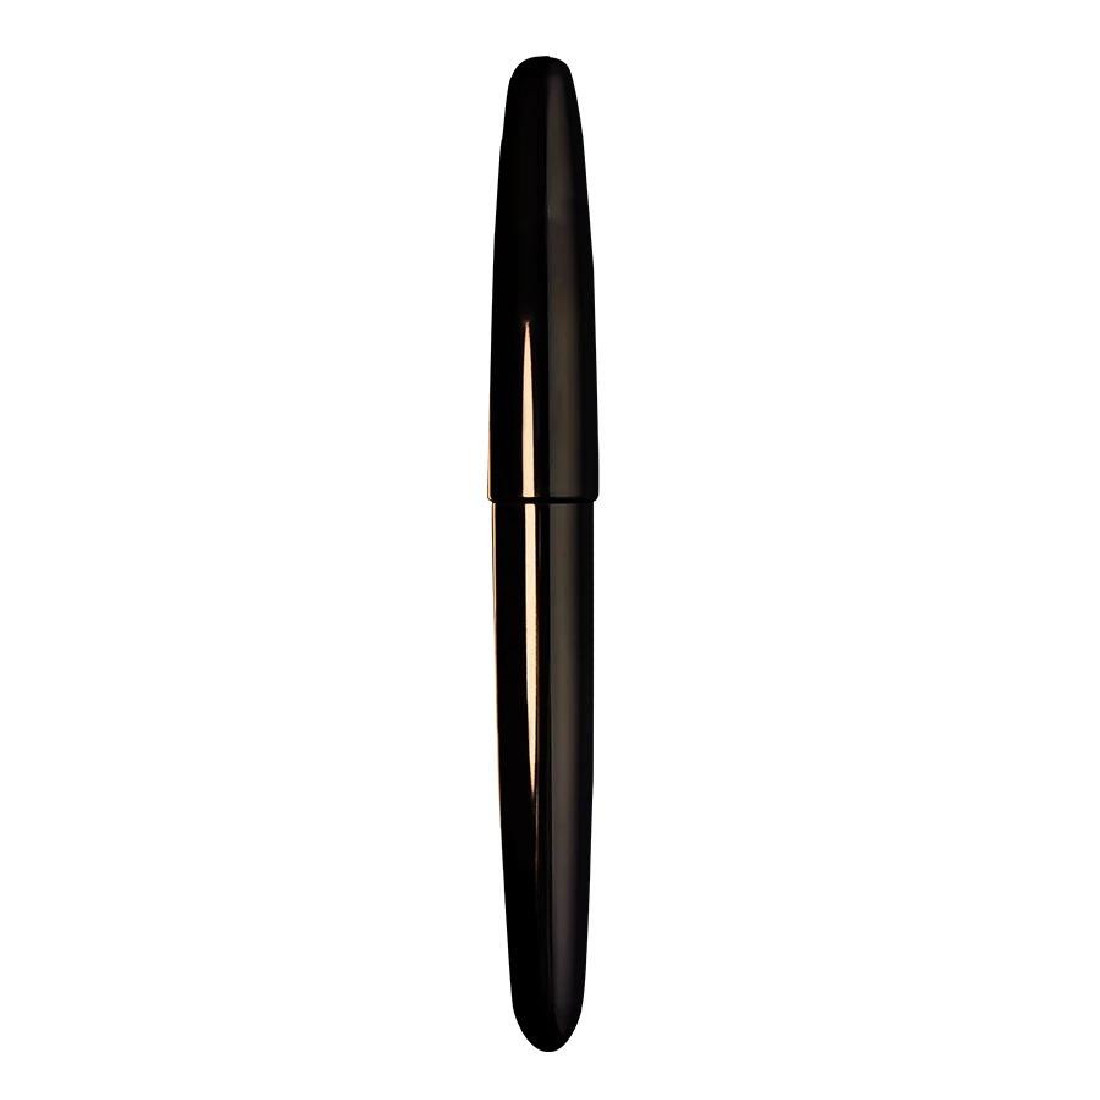 Wancher Dream Pen True Urushi Black - 18k Gold Nib